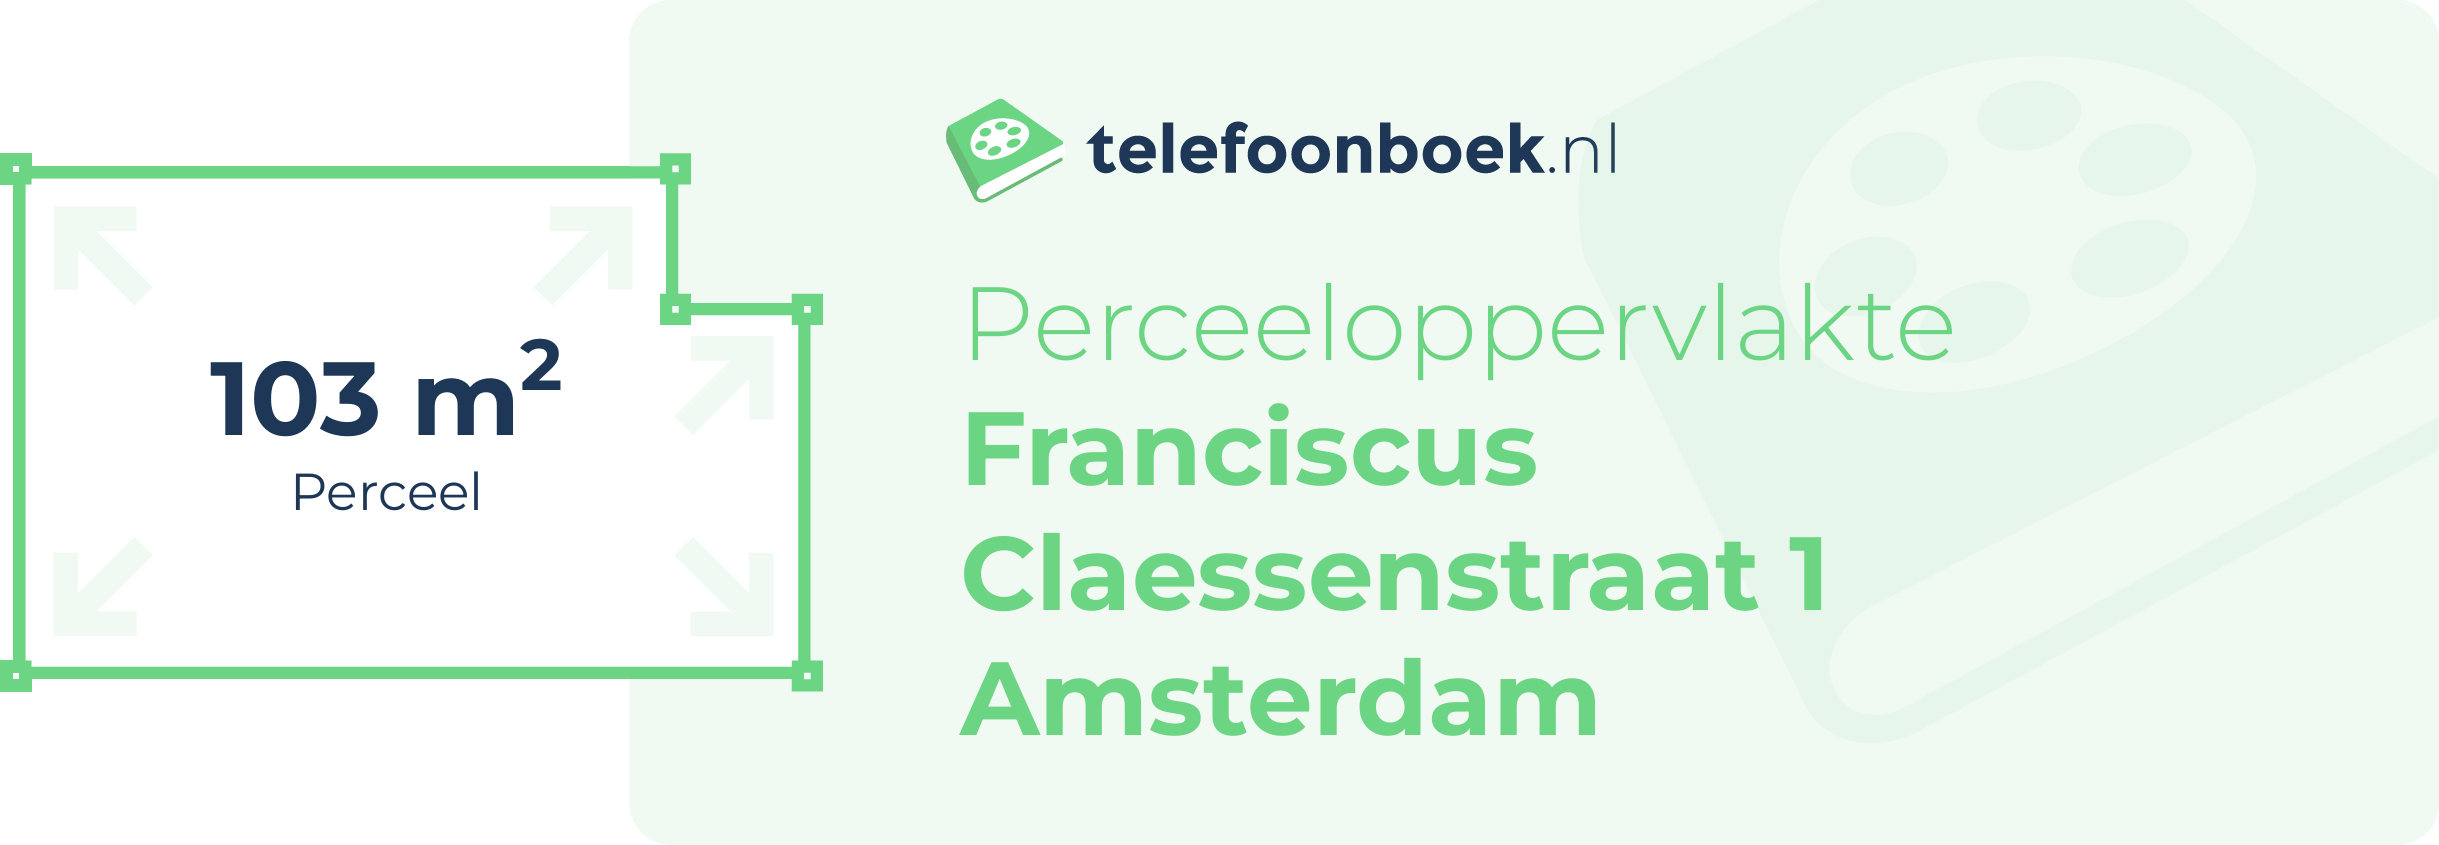 Perceeloppervlakte Franciscus Claessenstraat 1 Amsterdam